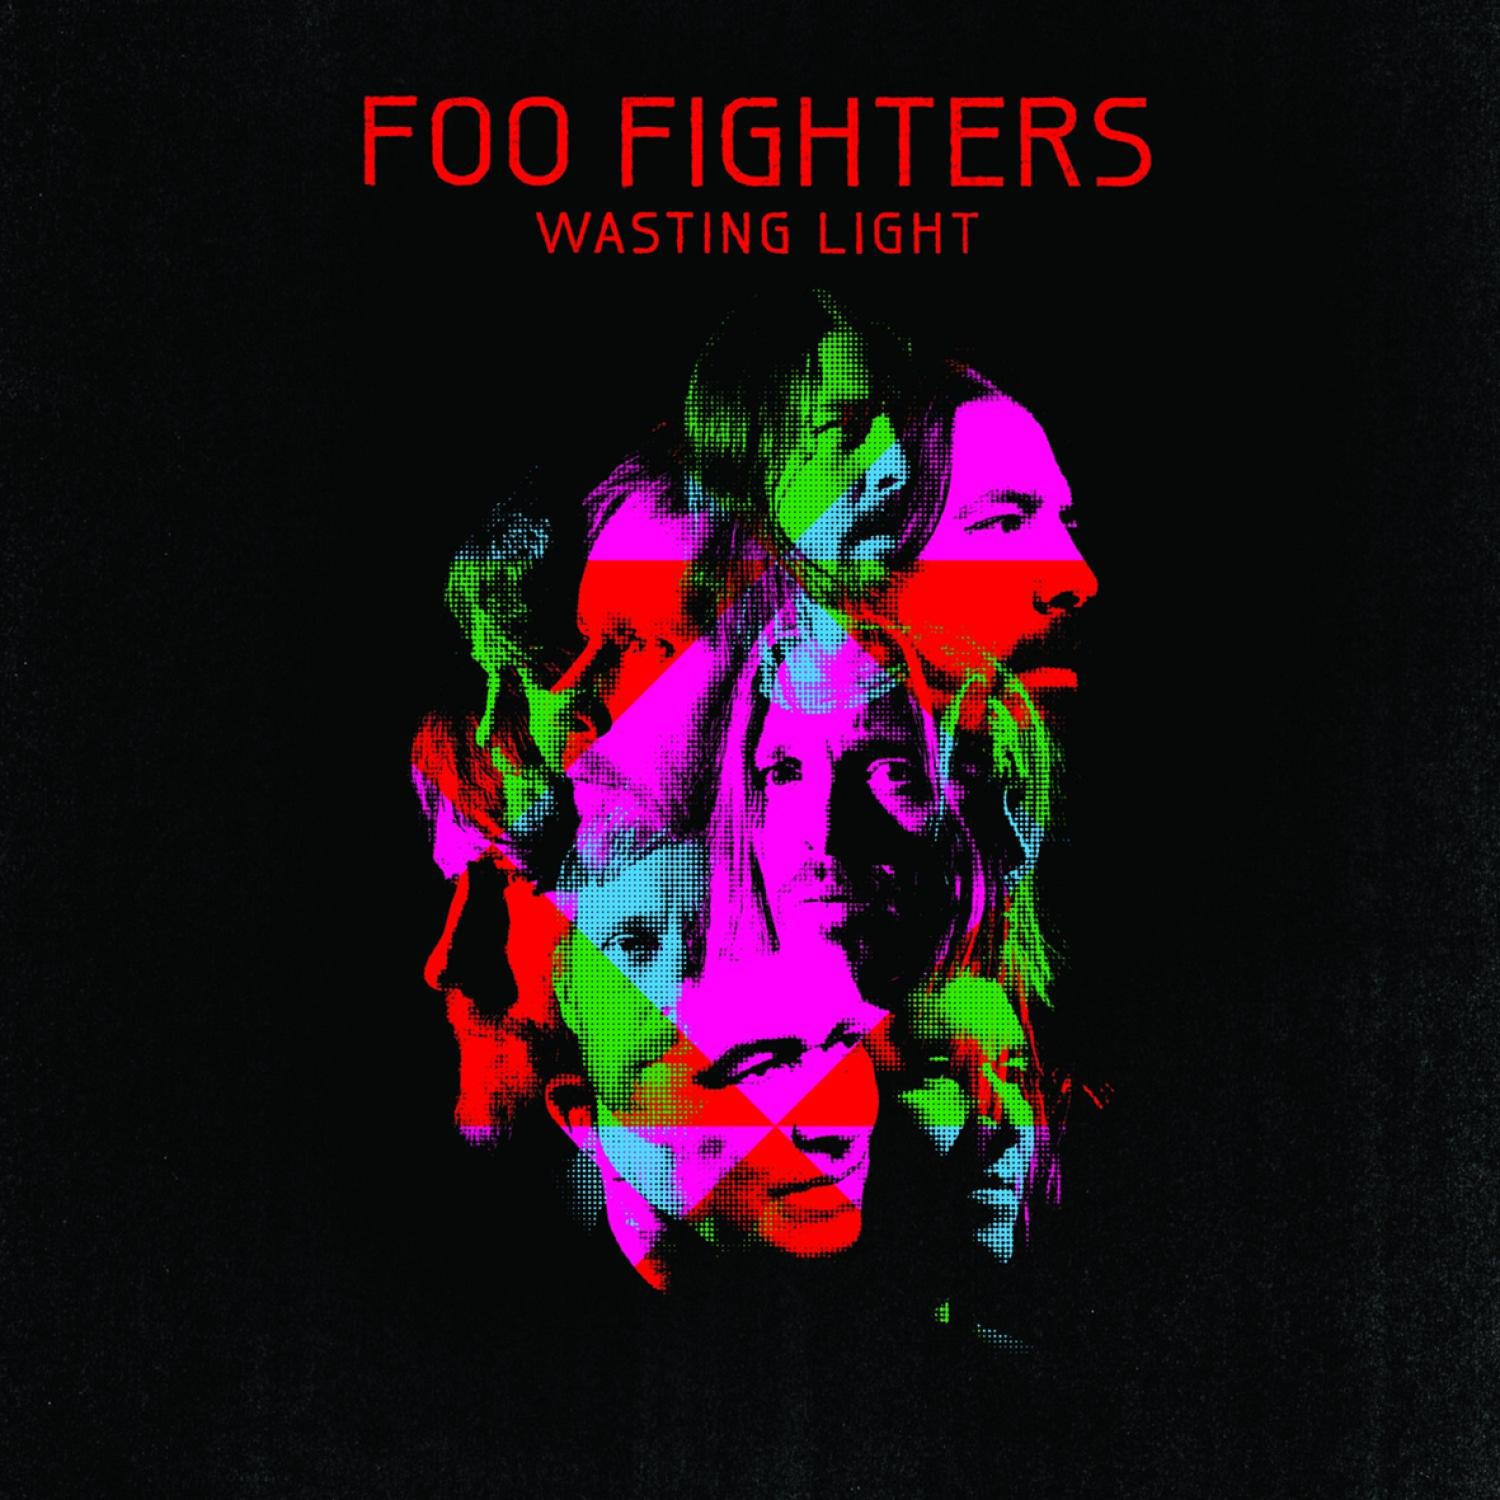 (Vinyl) Light - Fighters - Foo Wasting